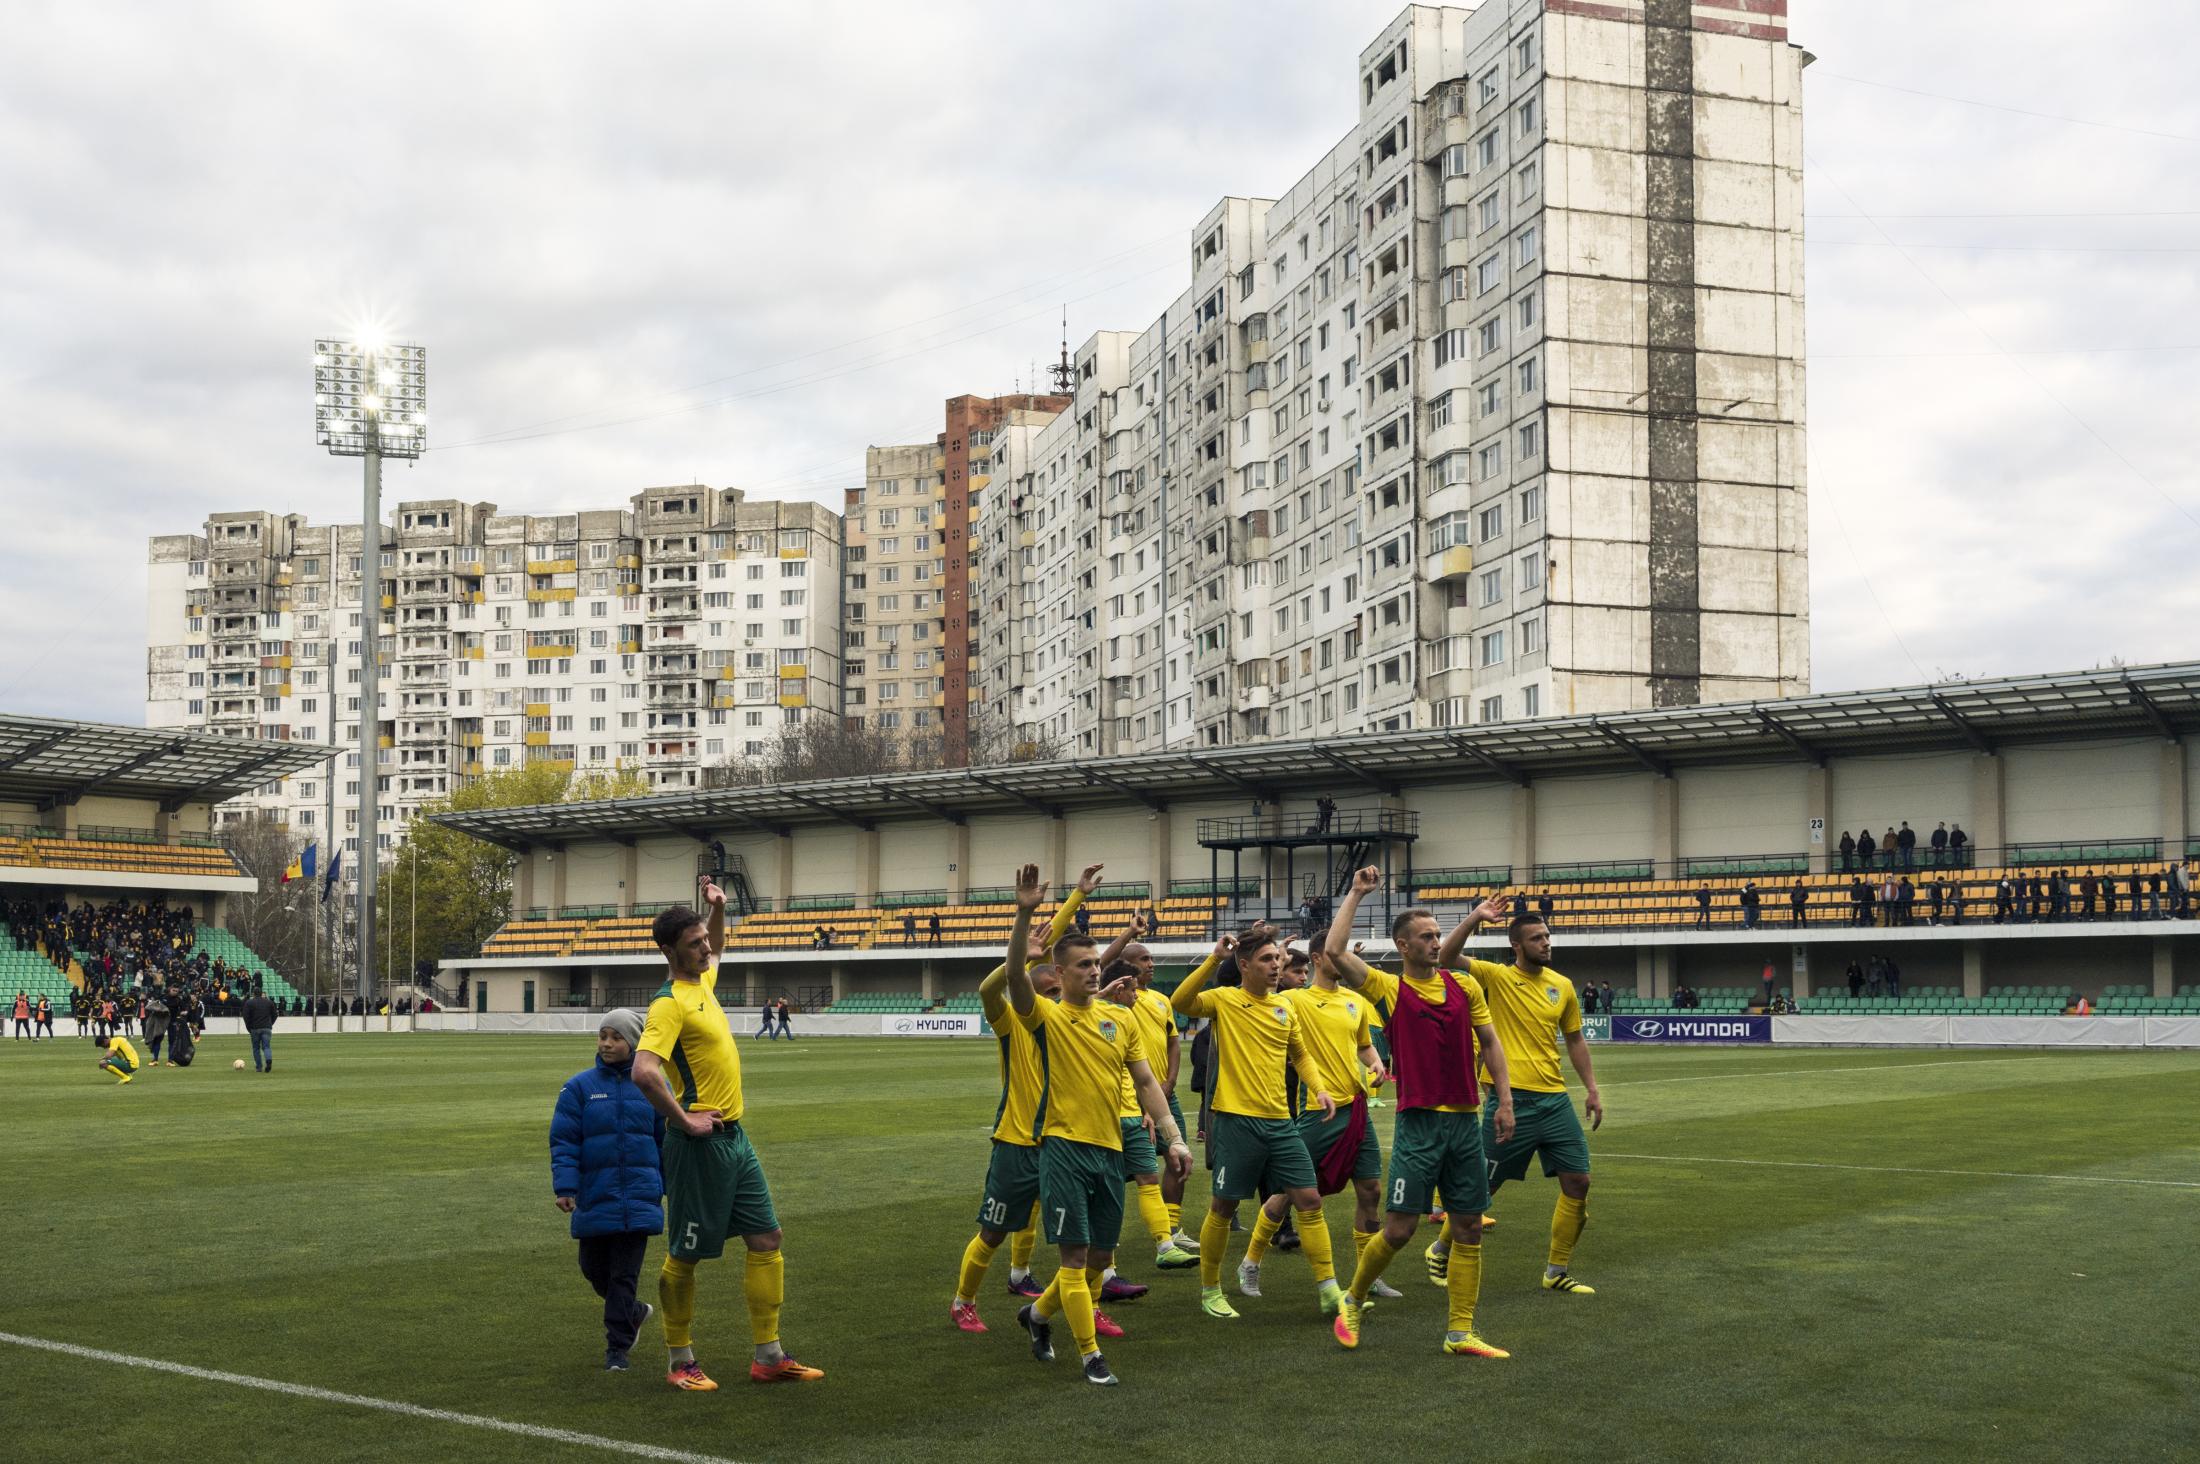 THE MOLDOVAN DERBY - Republic of Moldova / Chisinau / Derby day with FC...